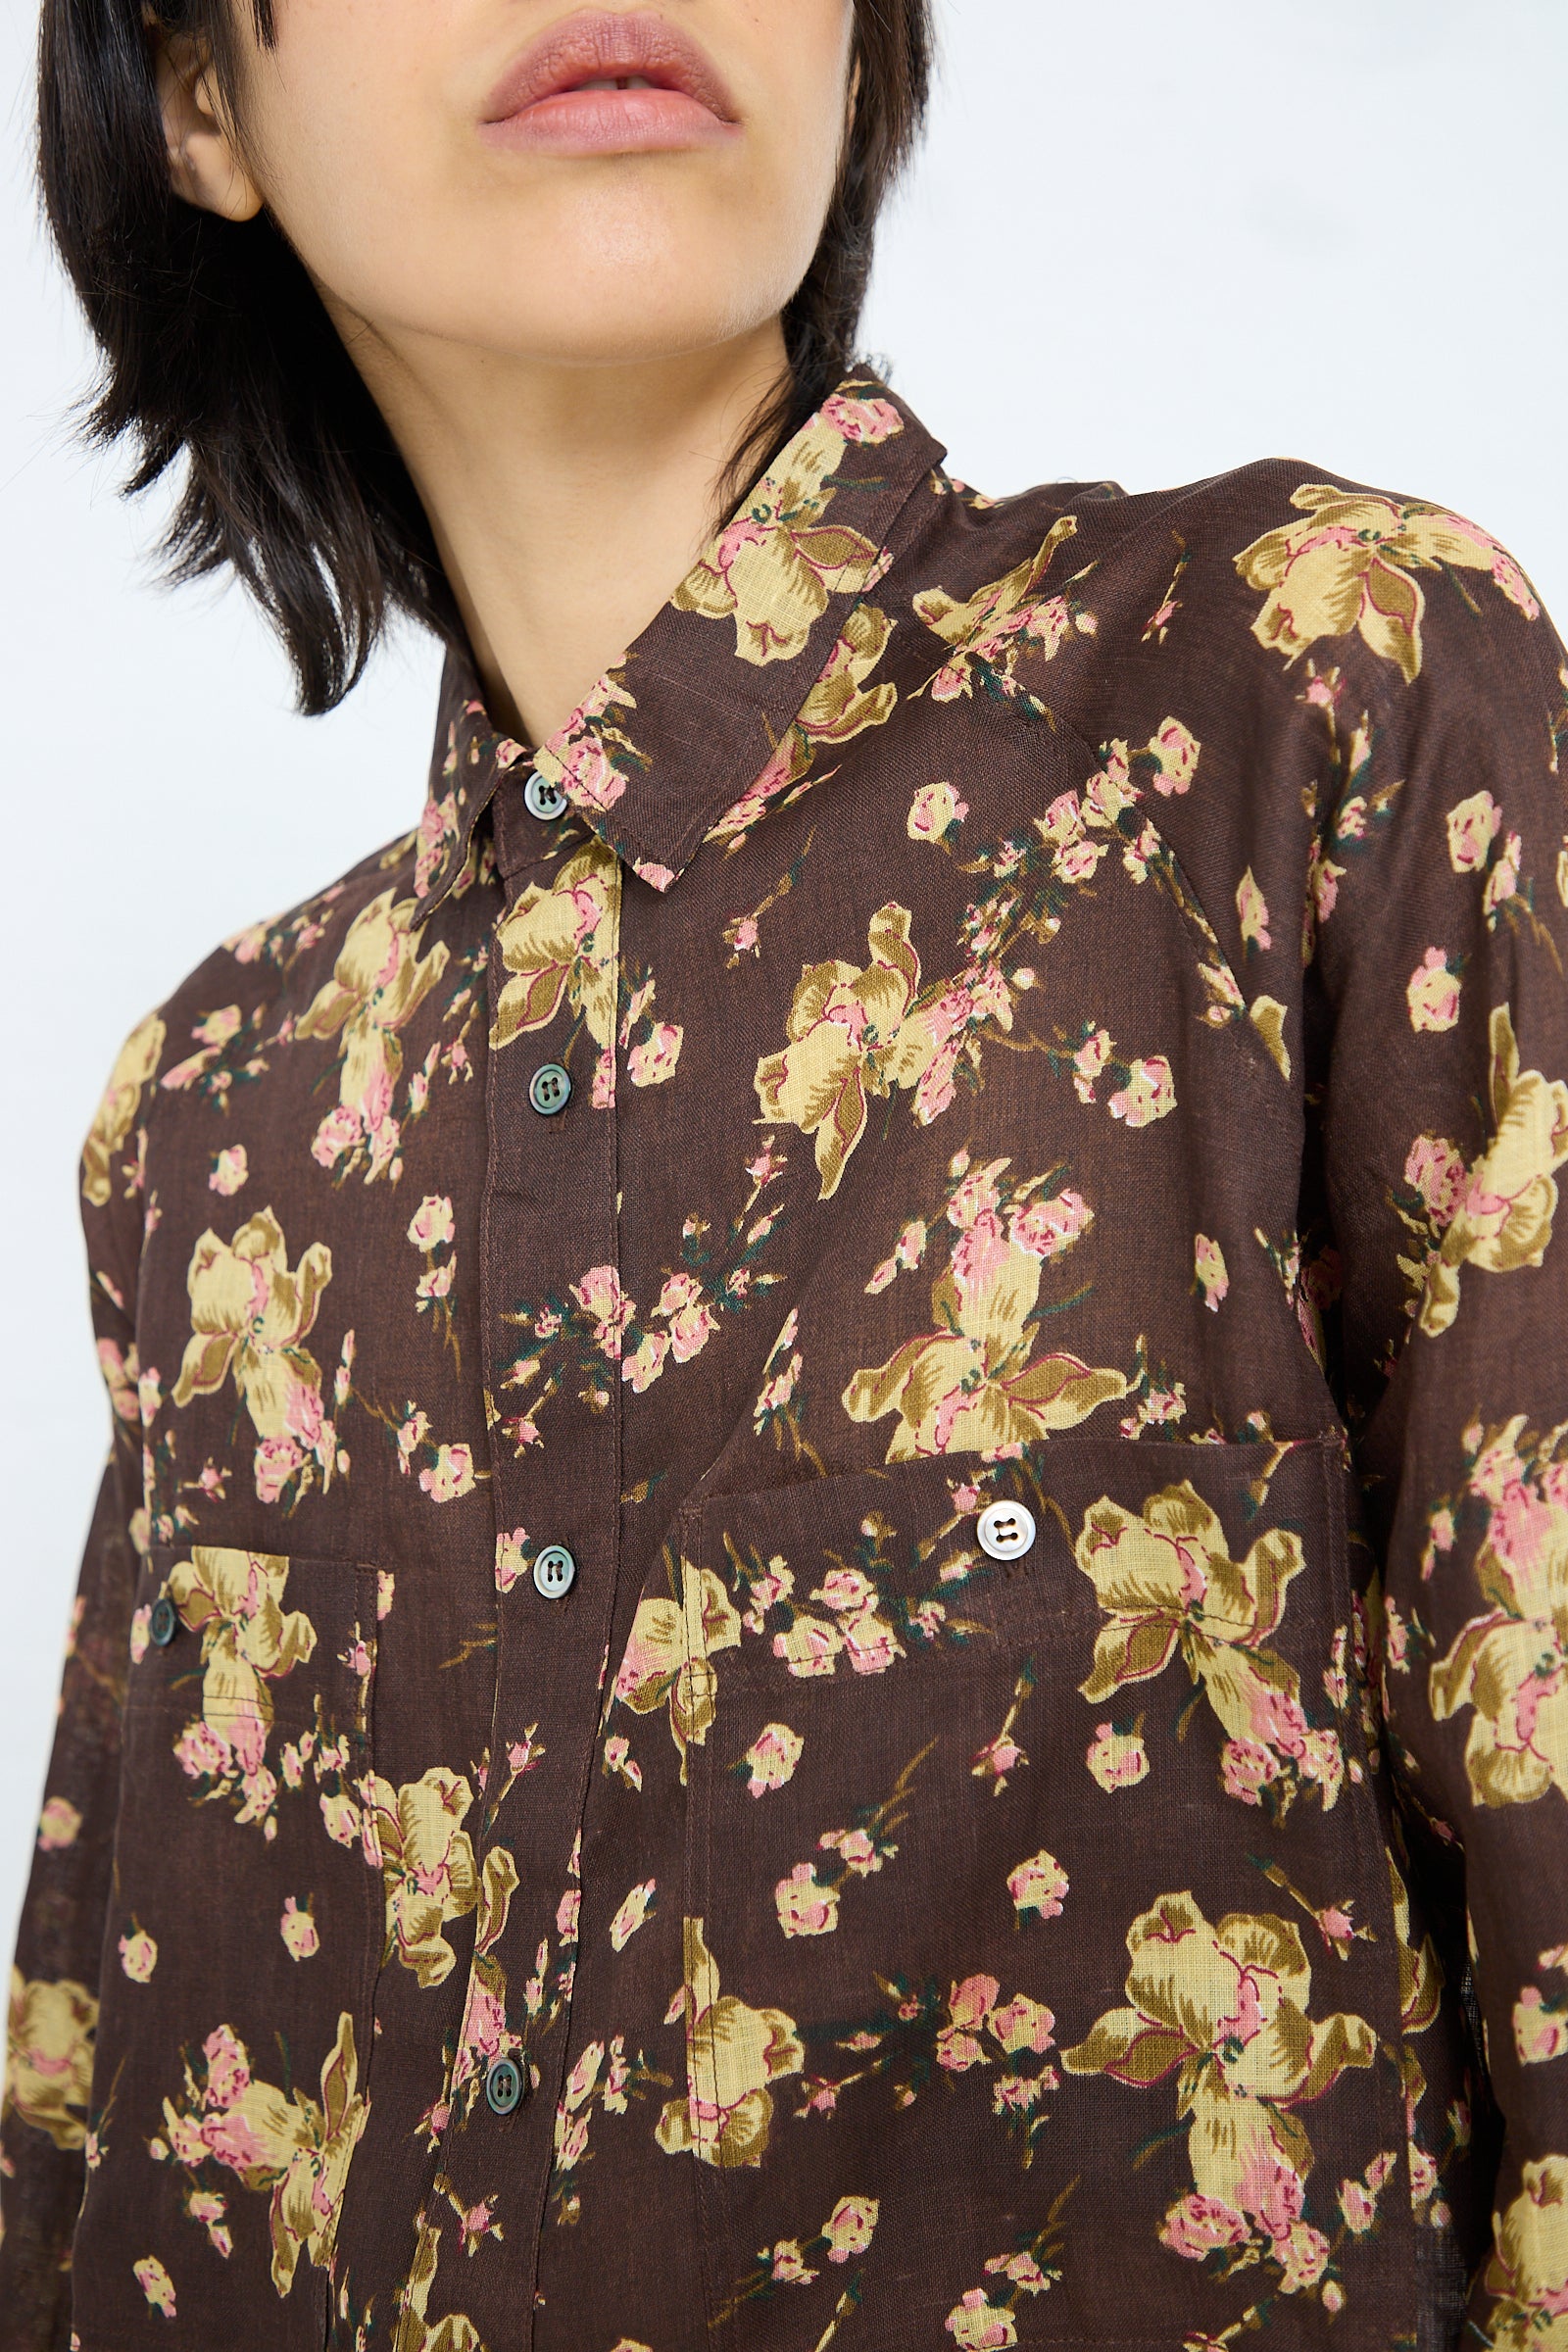 A person wearing the Ichi Antiquités Linen Flower Print Dress in Brown.